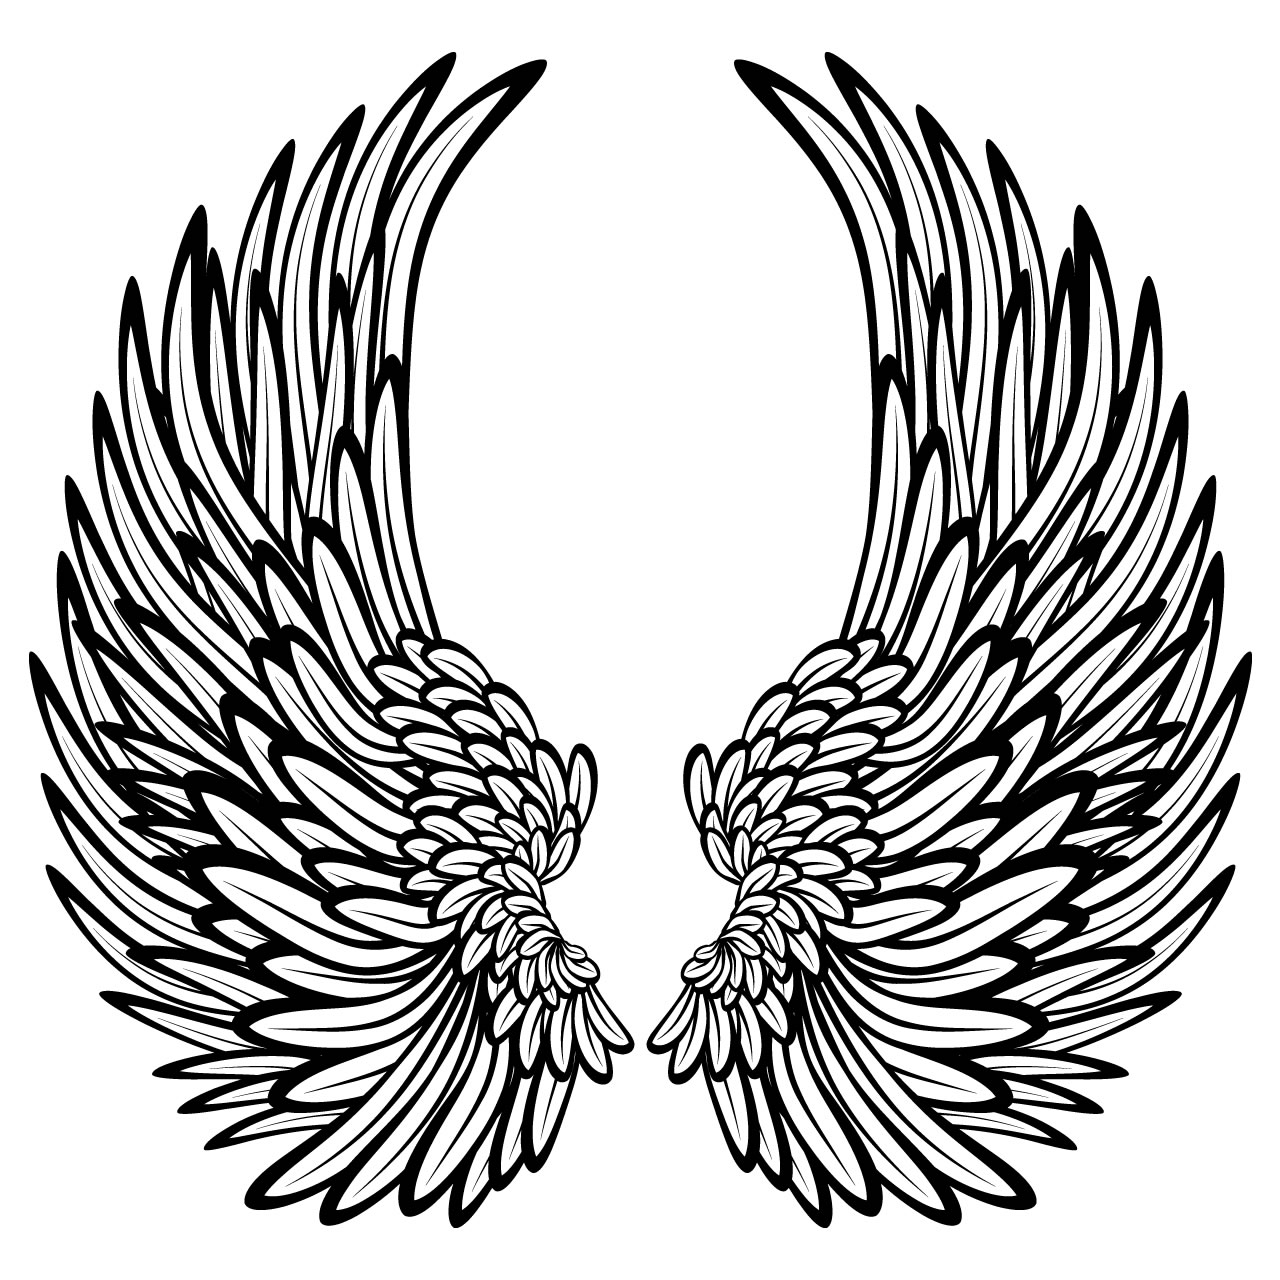 Cool Angel Wings Pictures To Print | imagebasket.net